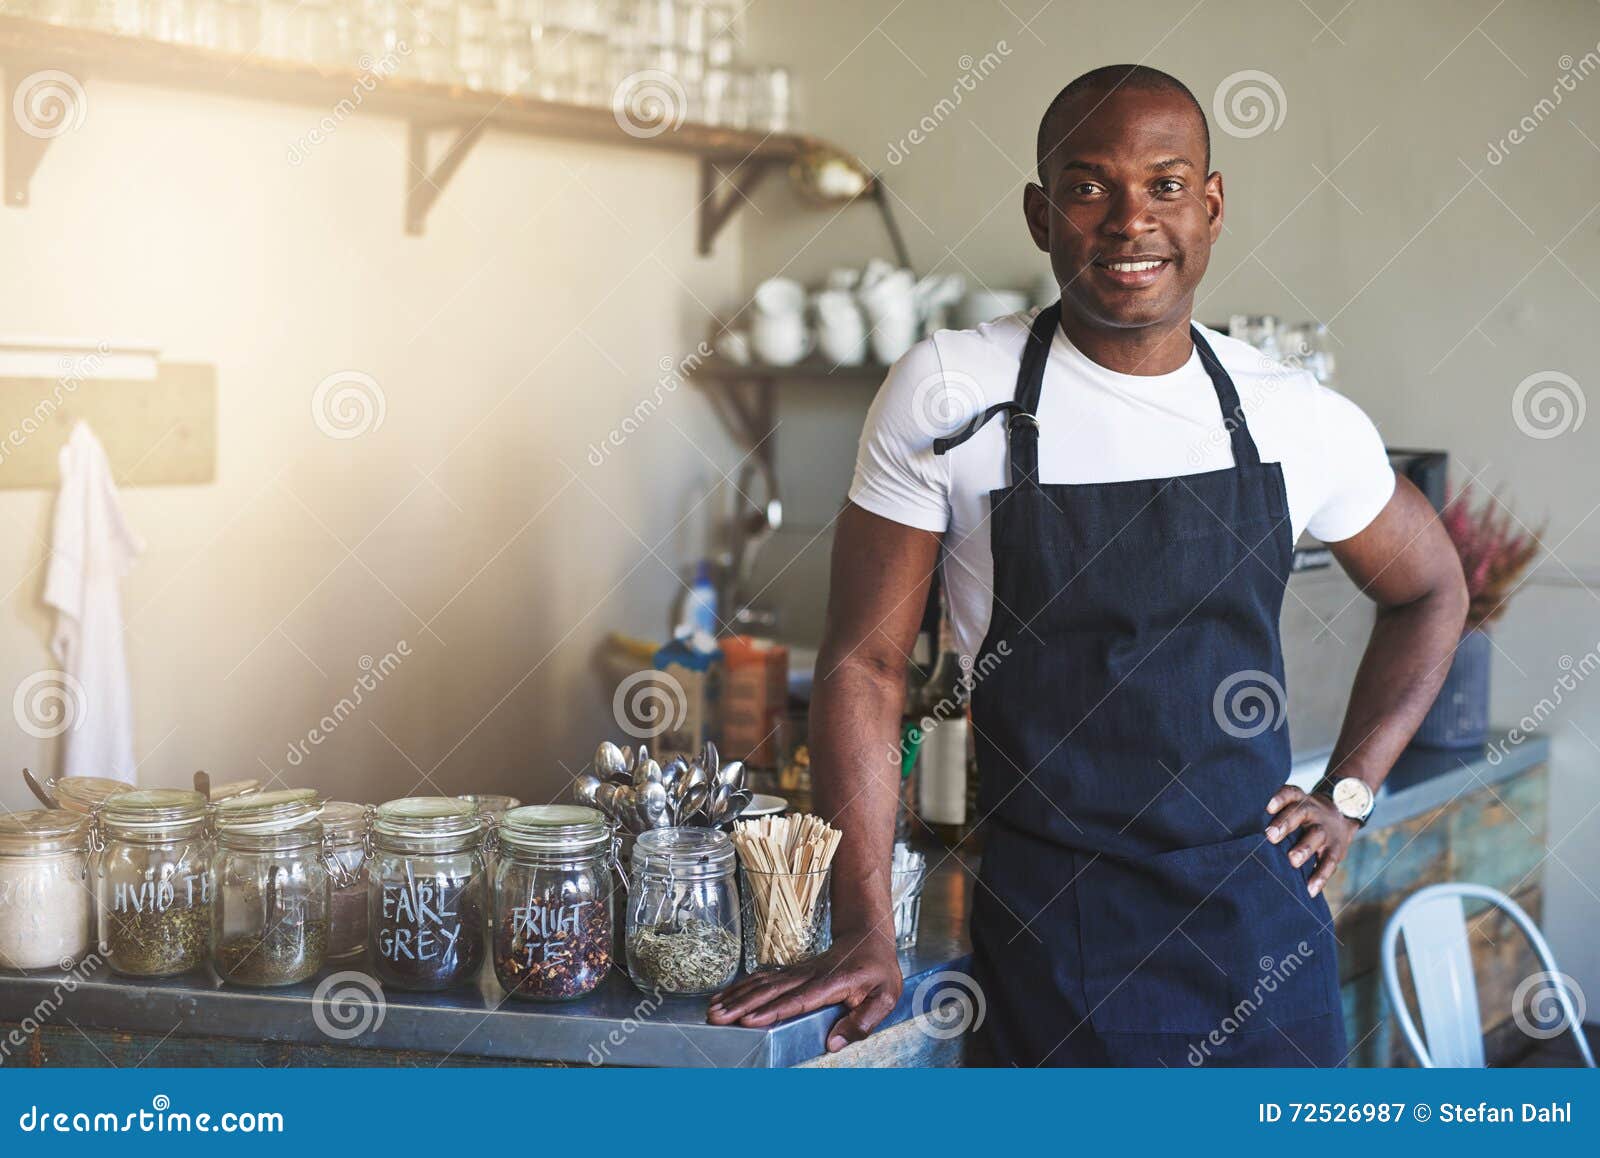 handsome black entrepreneur stands by cafe counter